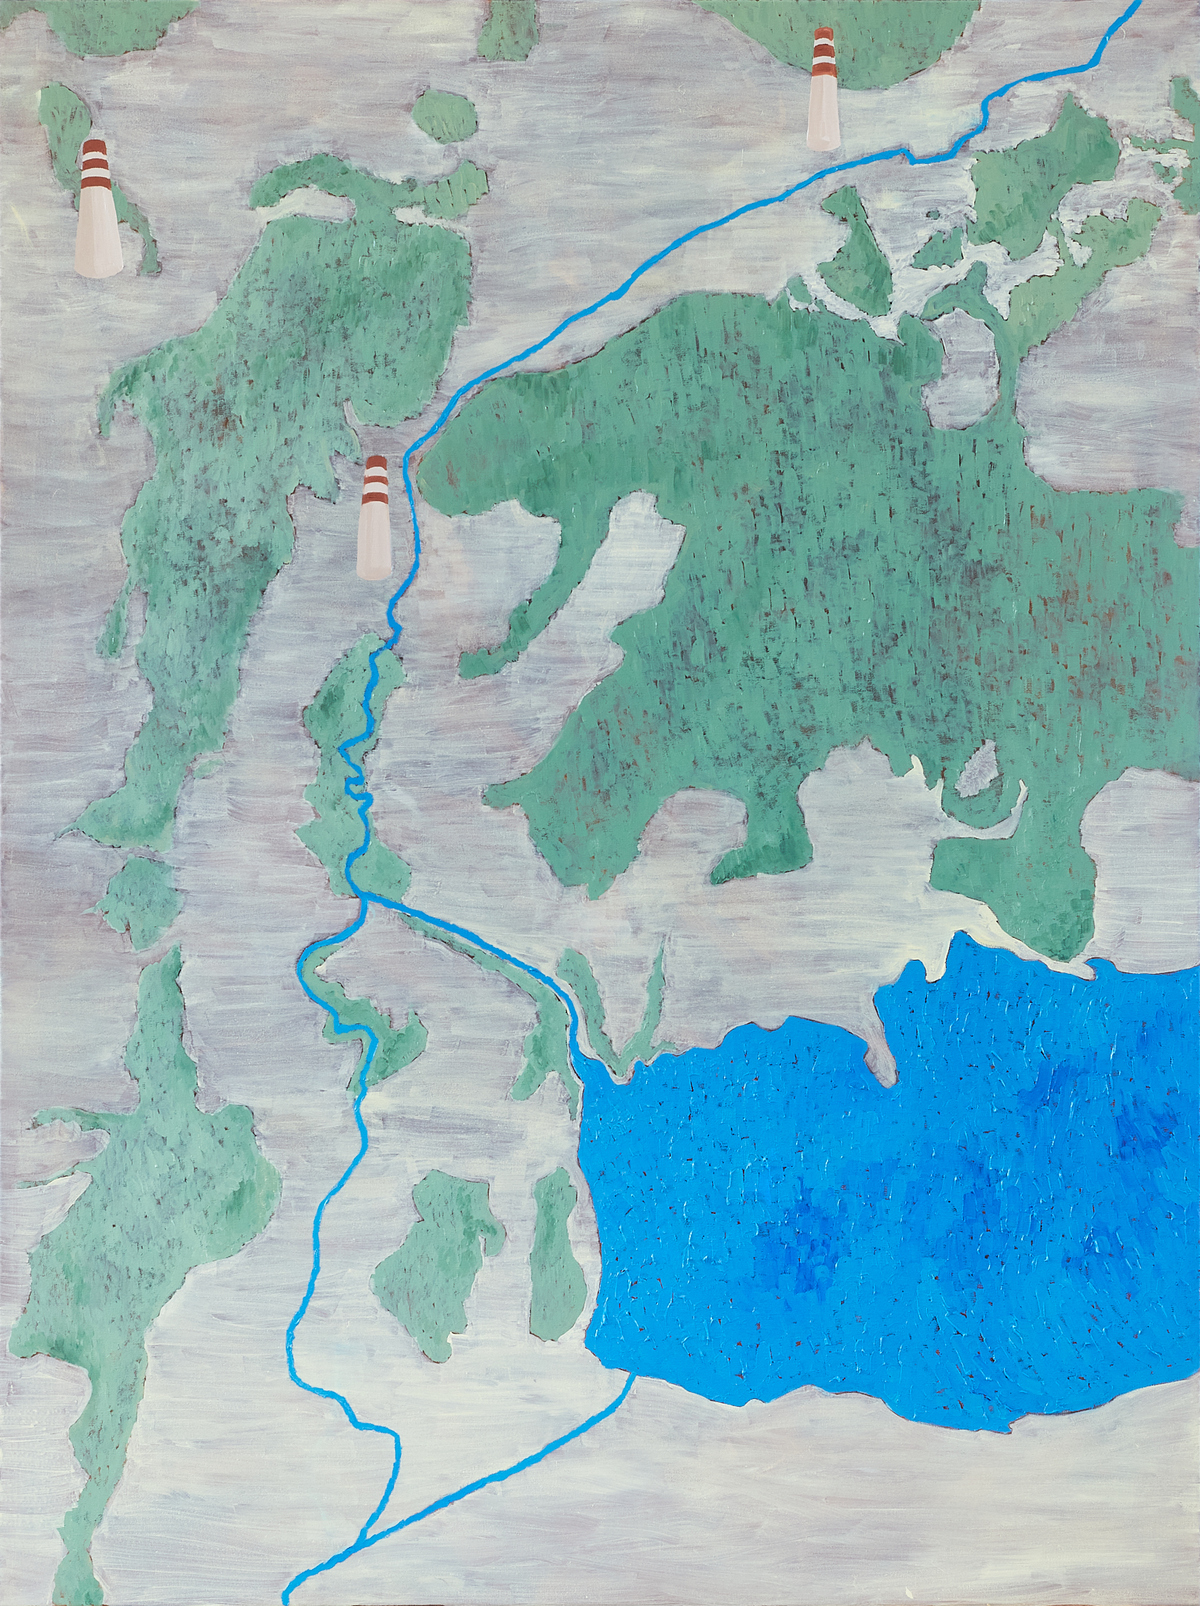 Map, 160 x 120 cm